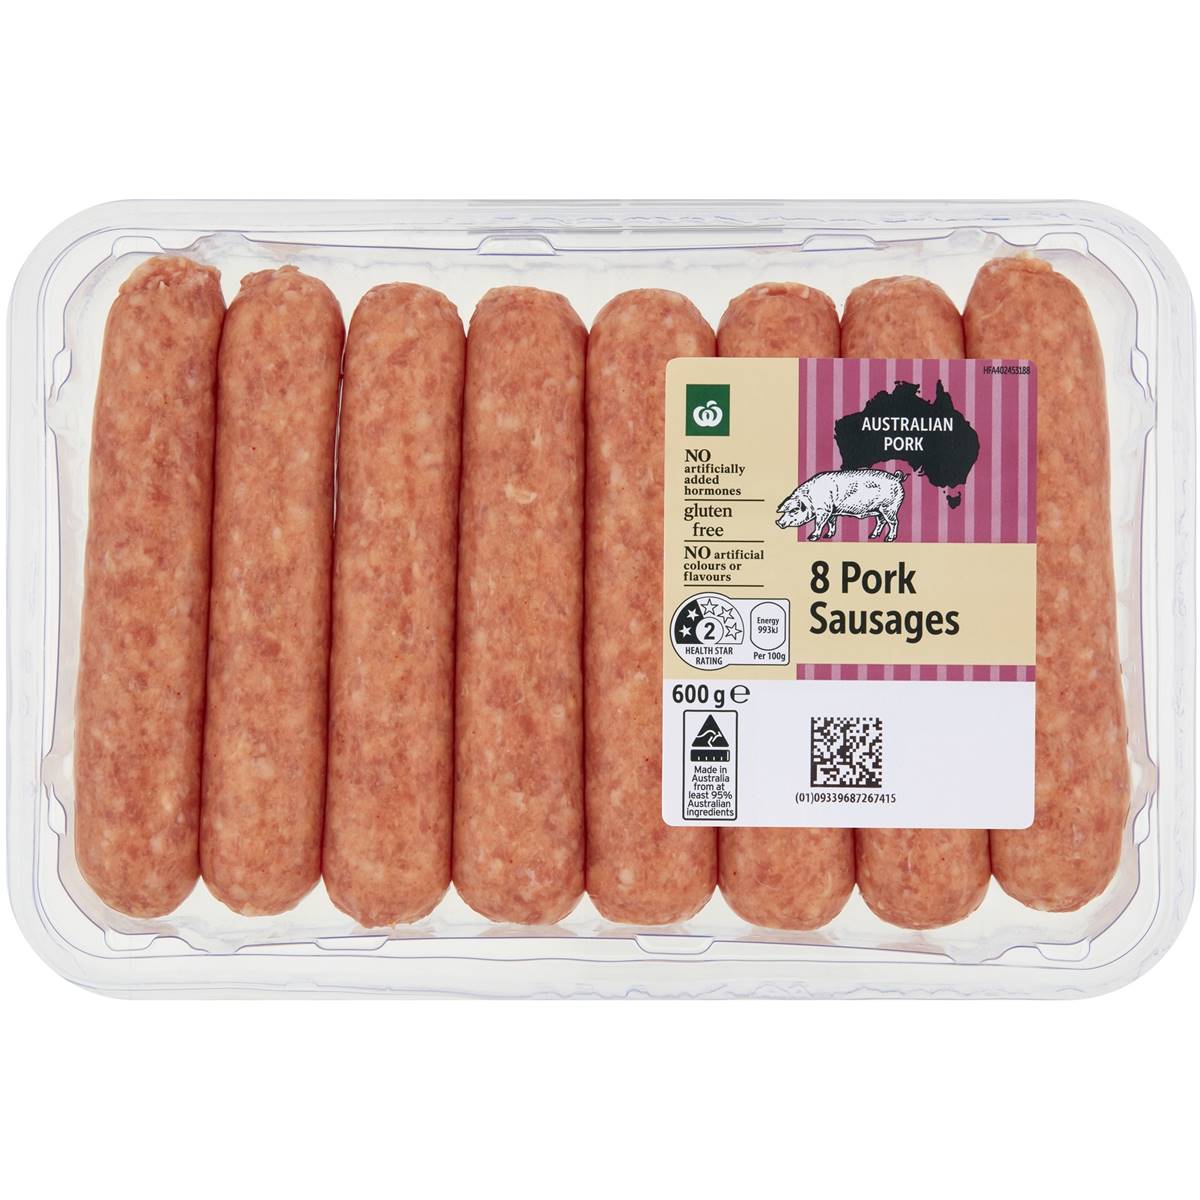 Calories in Woolworths 8 Pork Sausages